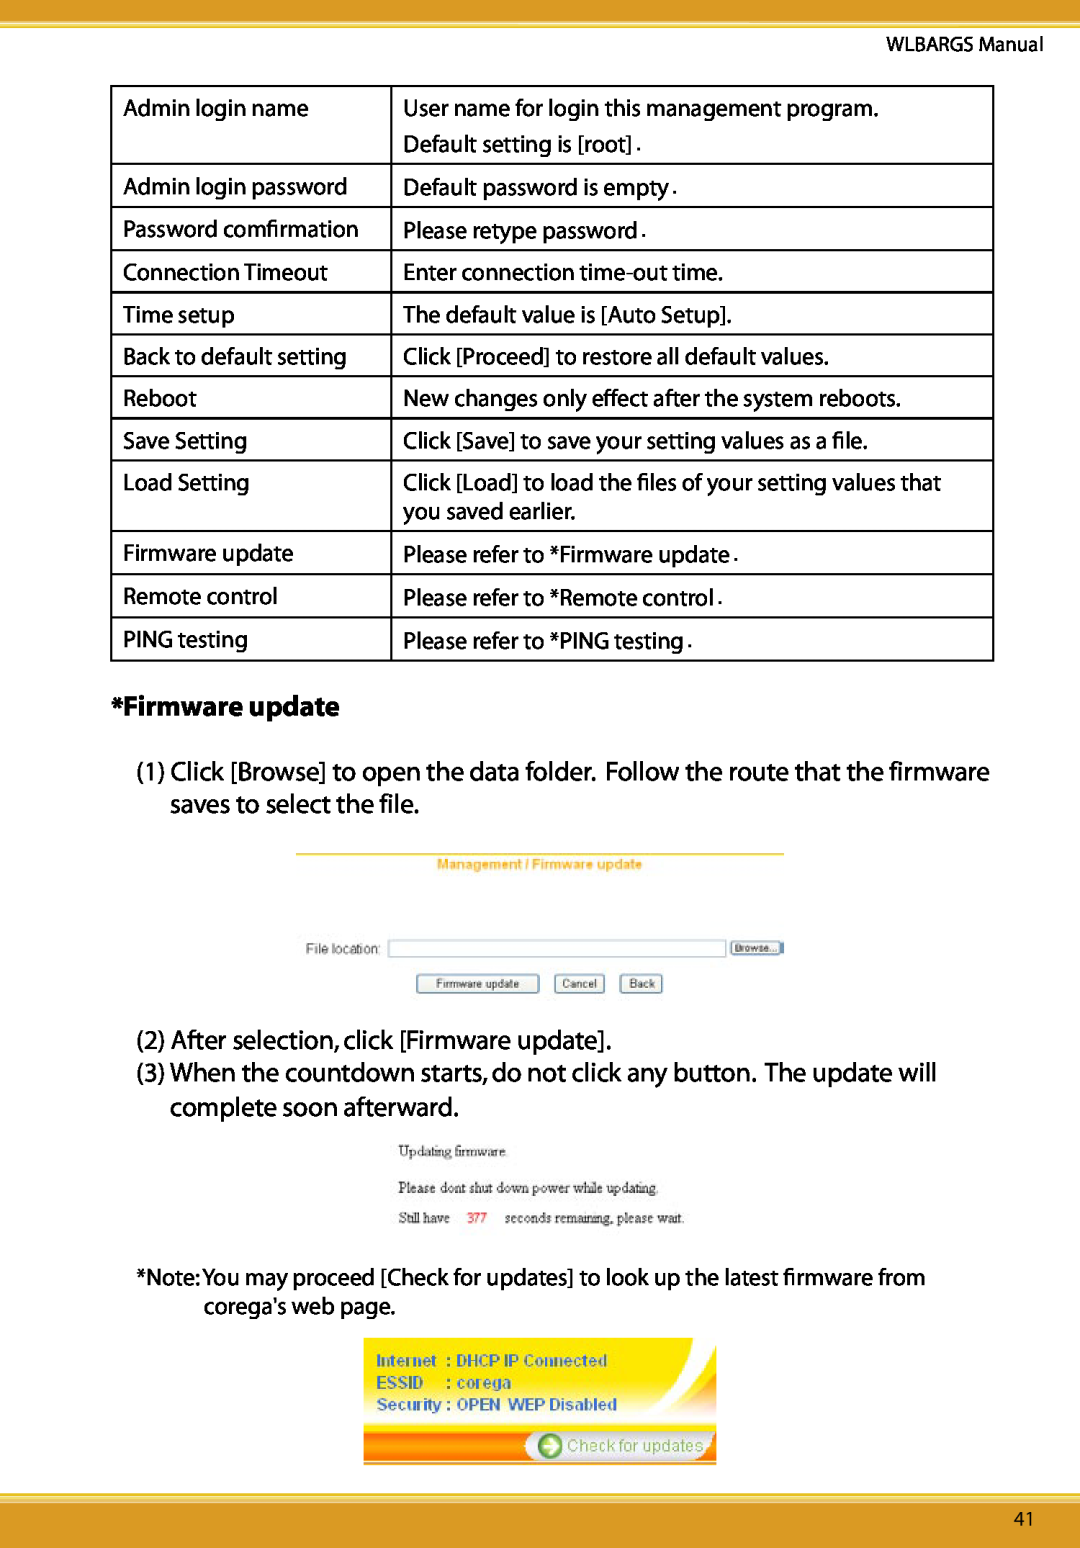 Allied Telesis CG-WLBARGS manual Firmware update 